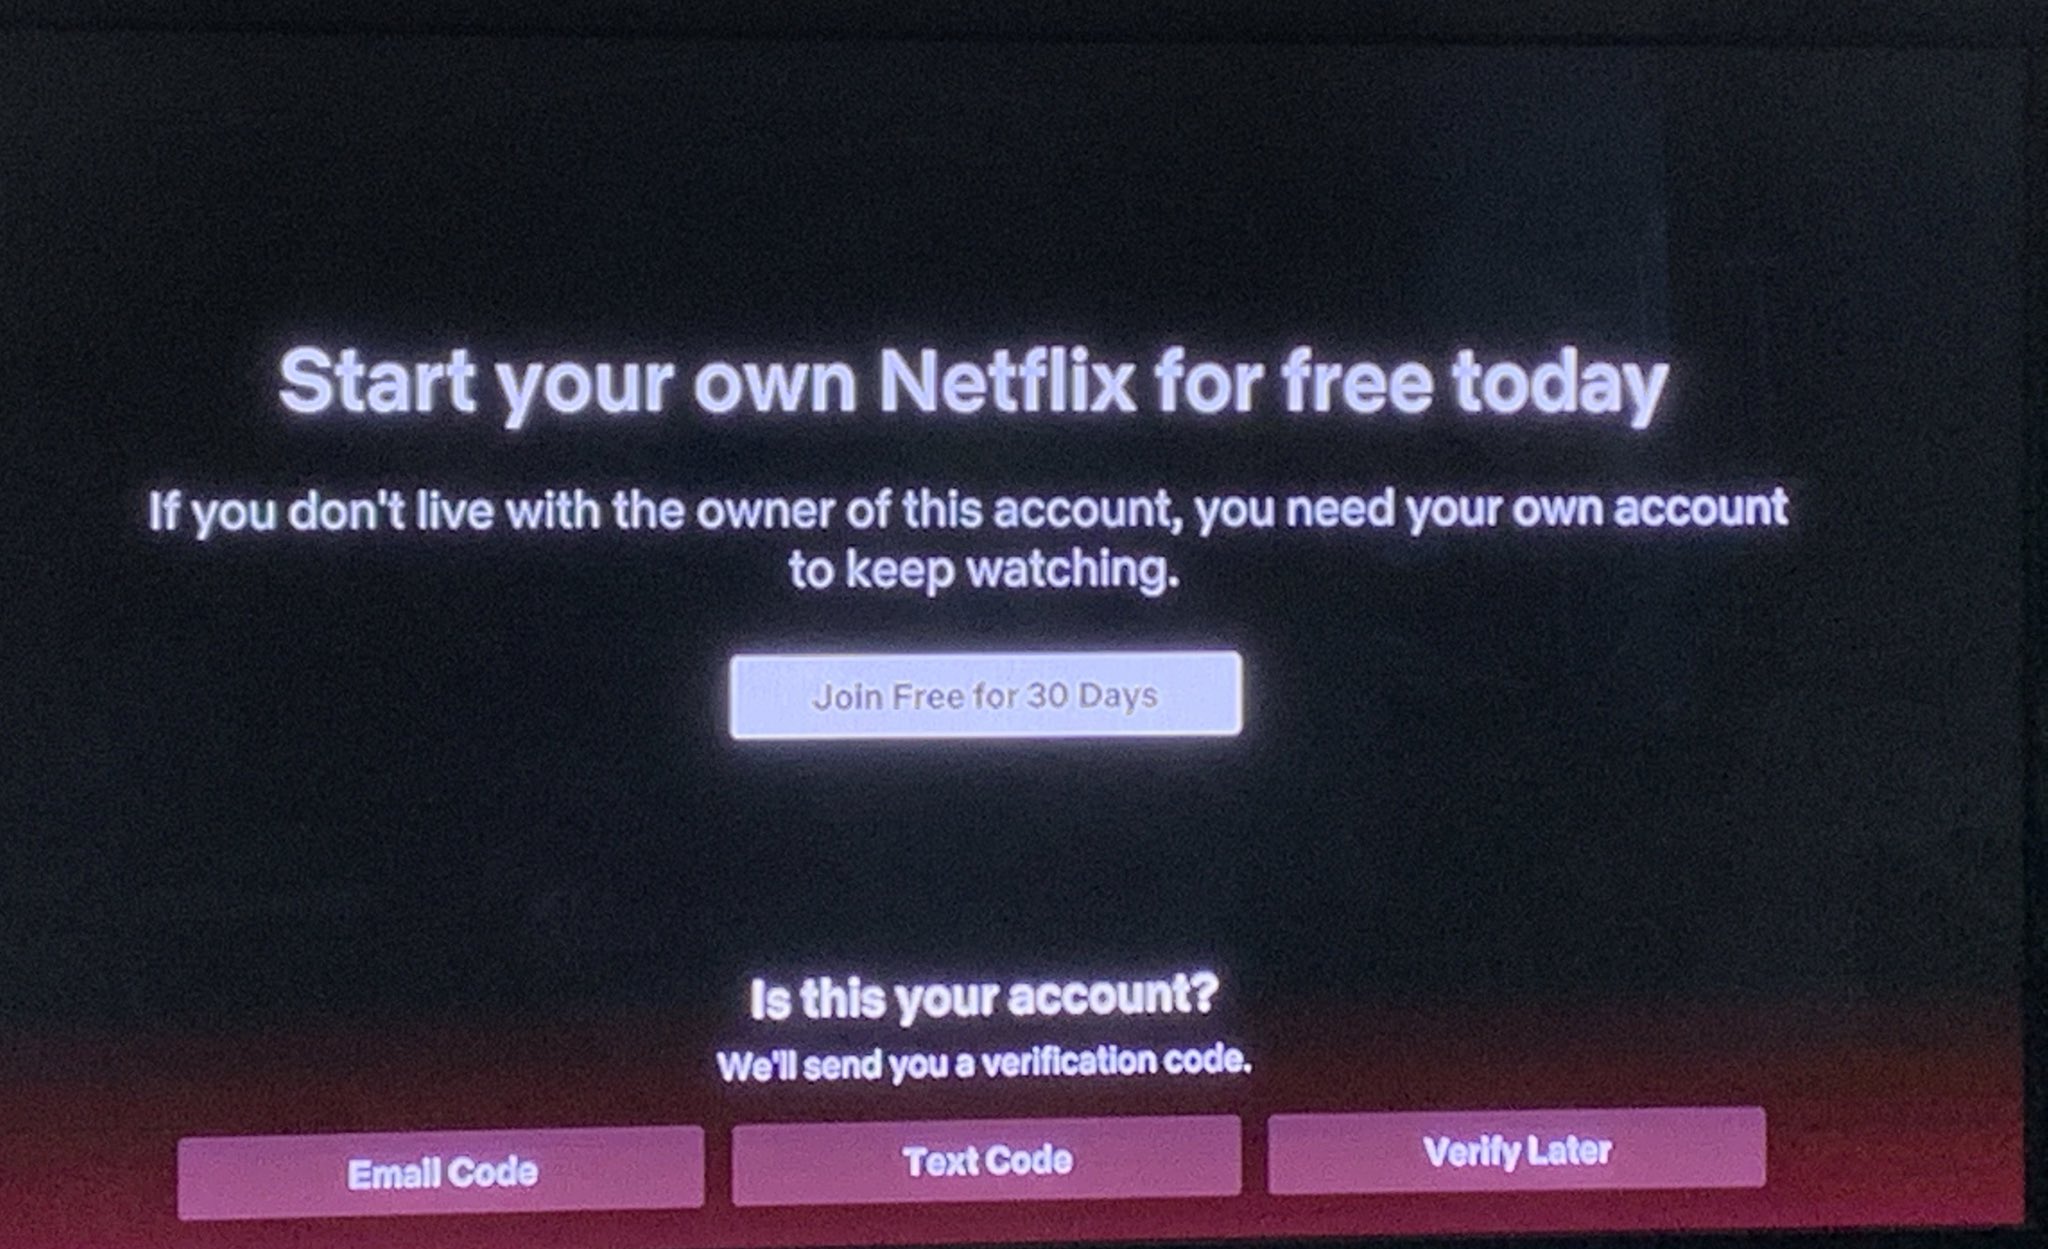 Netflix Account sharing limitation